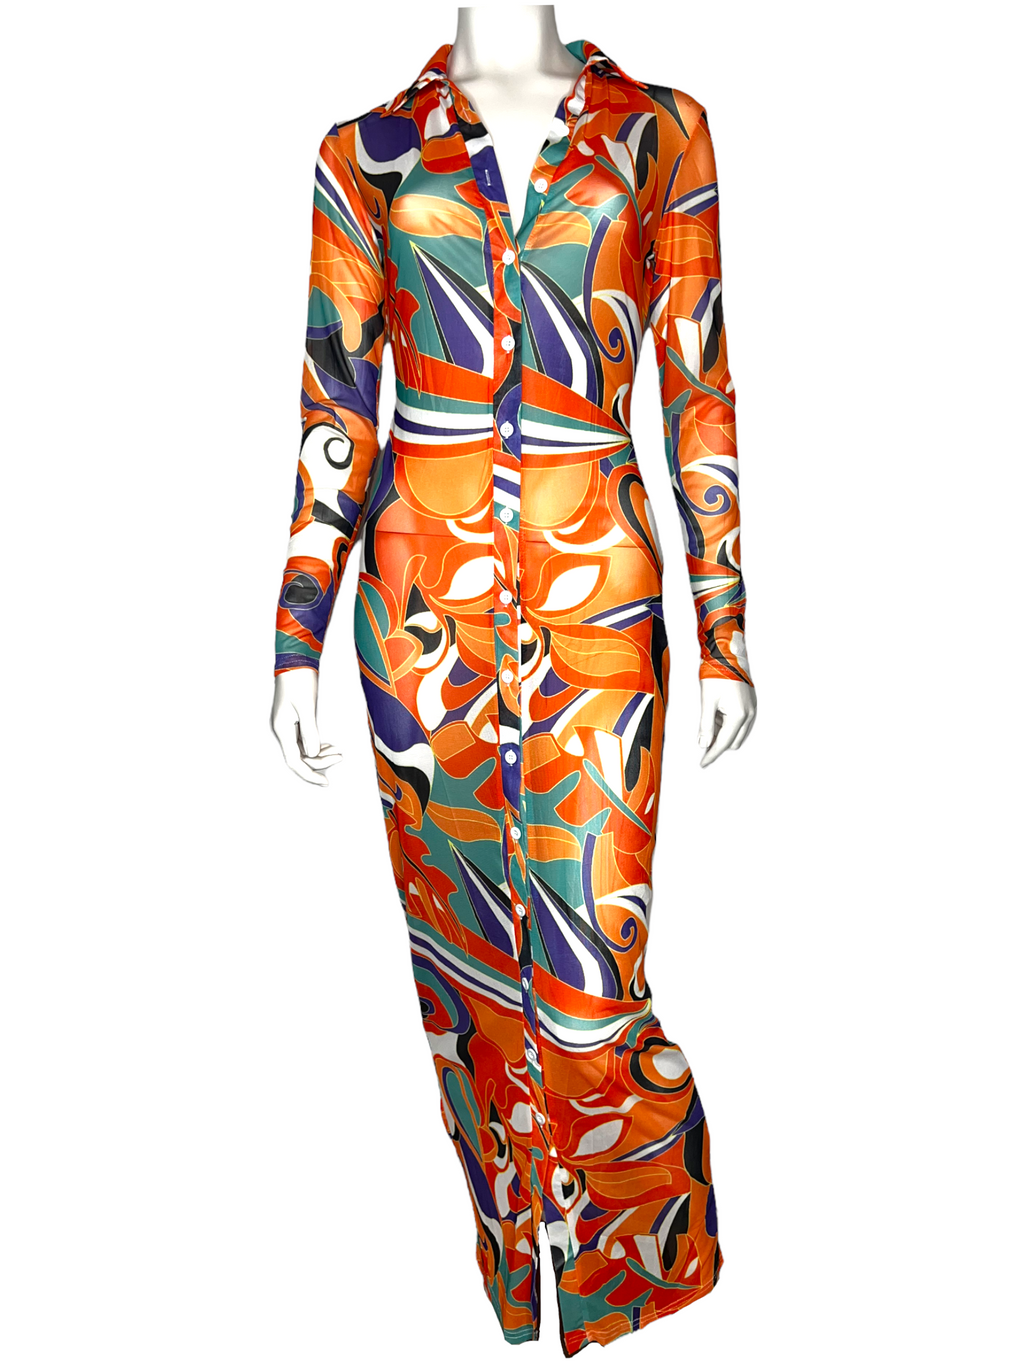 Mesh Digital Print Orange Button Up Dress